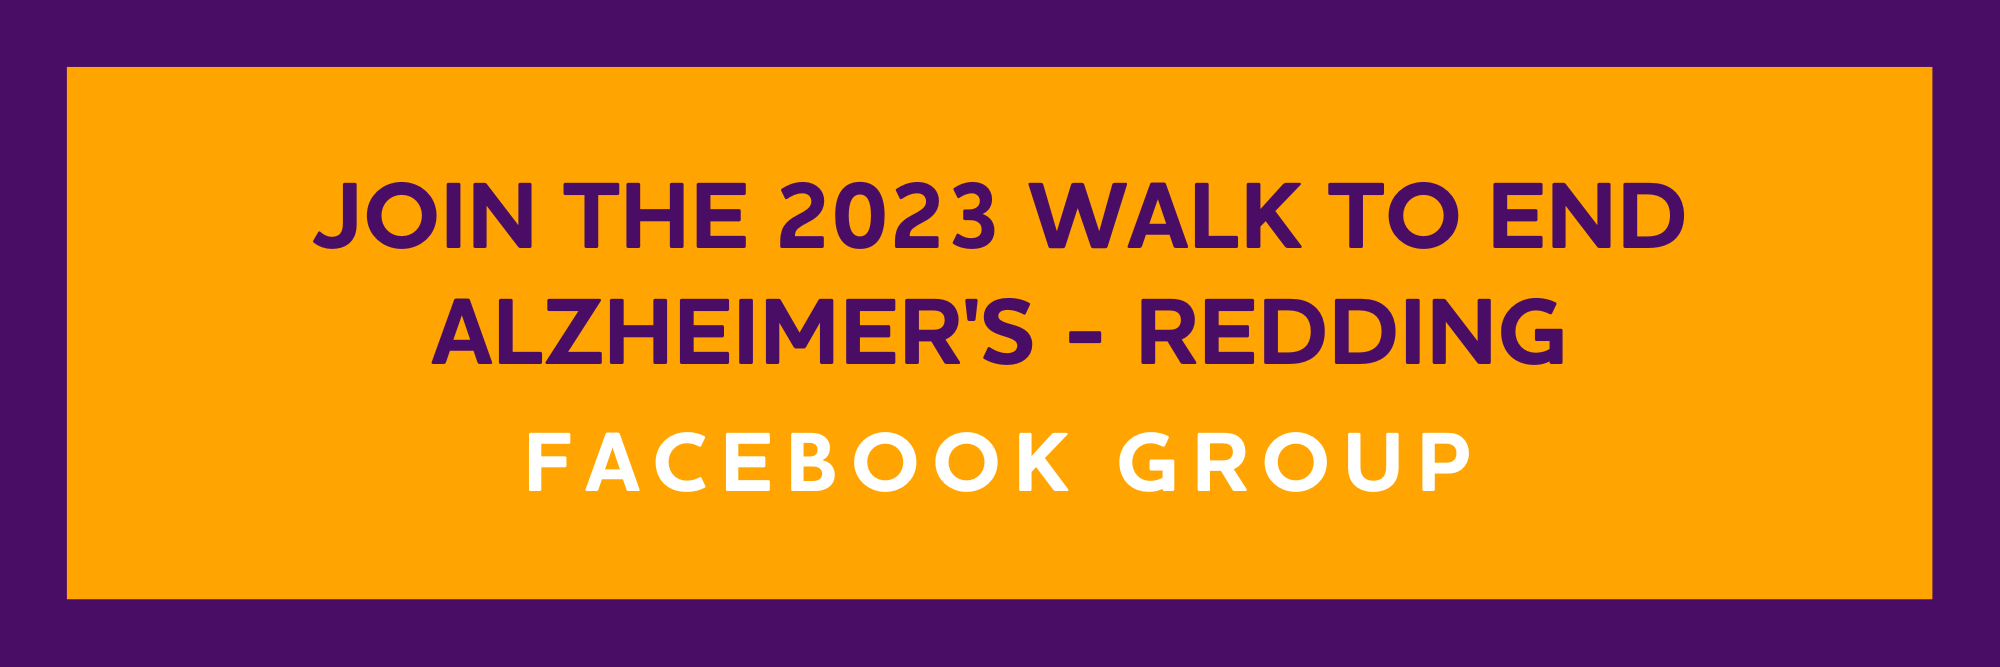 Redding Walk FB Page 2023